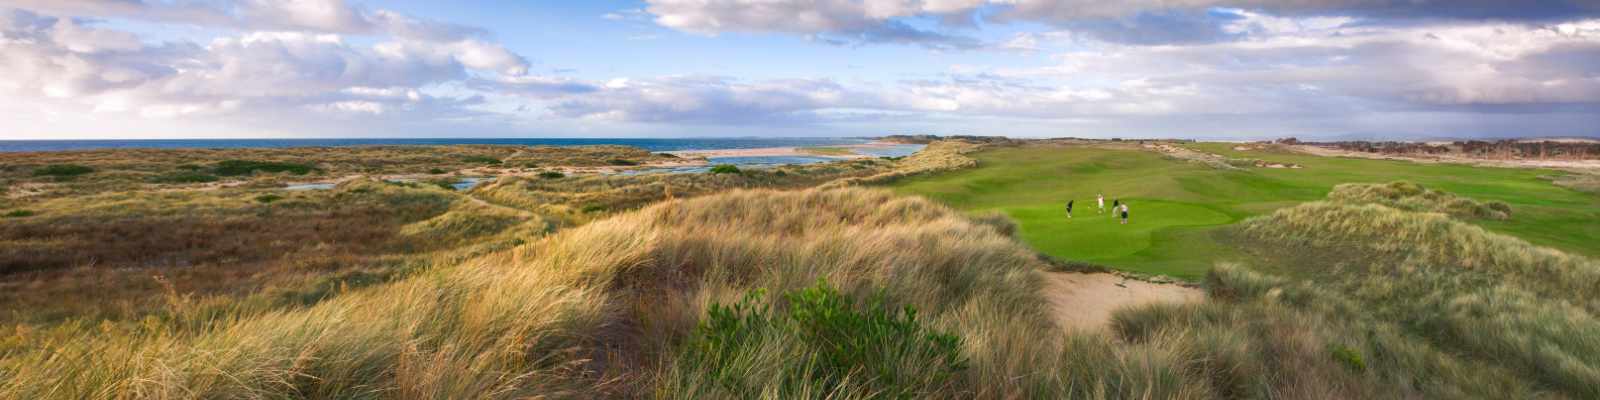 Golfplatz Barnbougle Dunes in Australien (photo by Inesa Hill / Shutterstock.com)